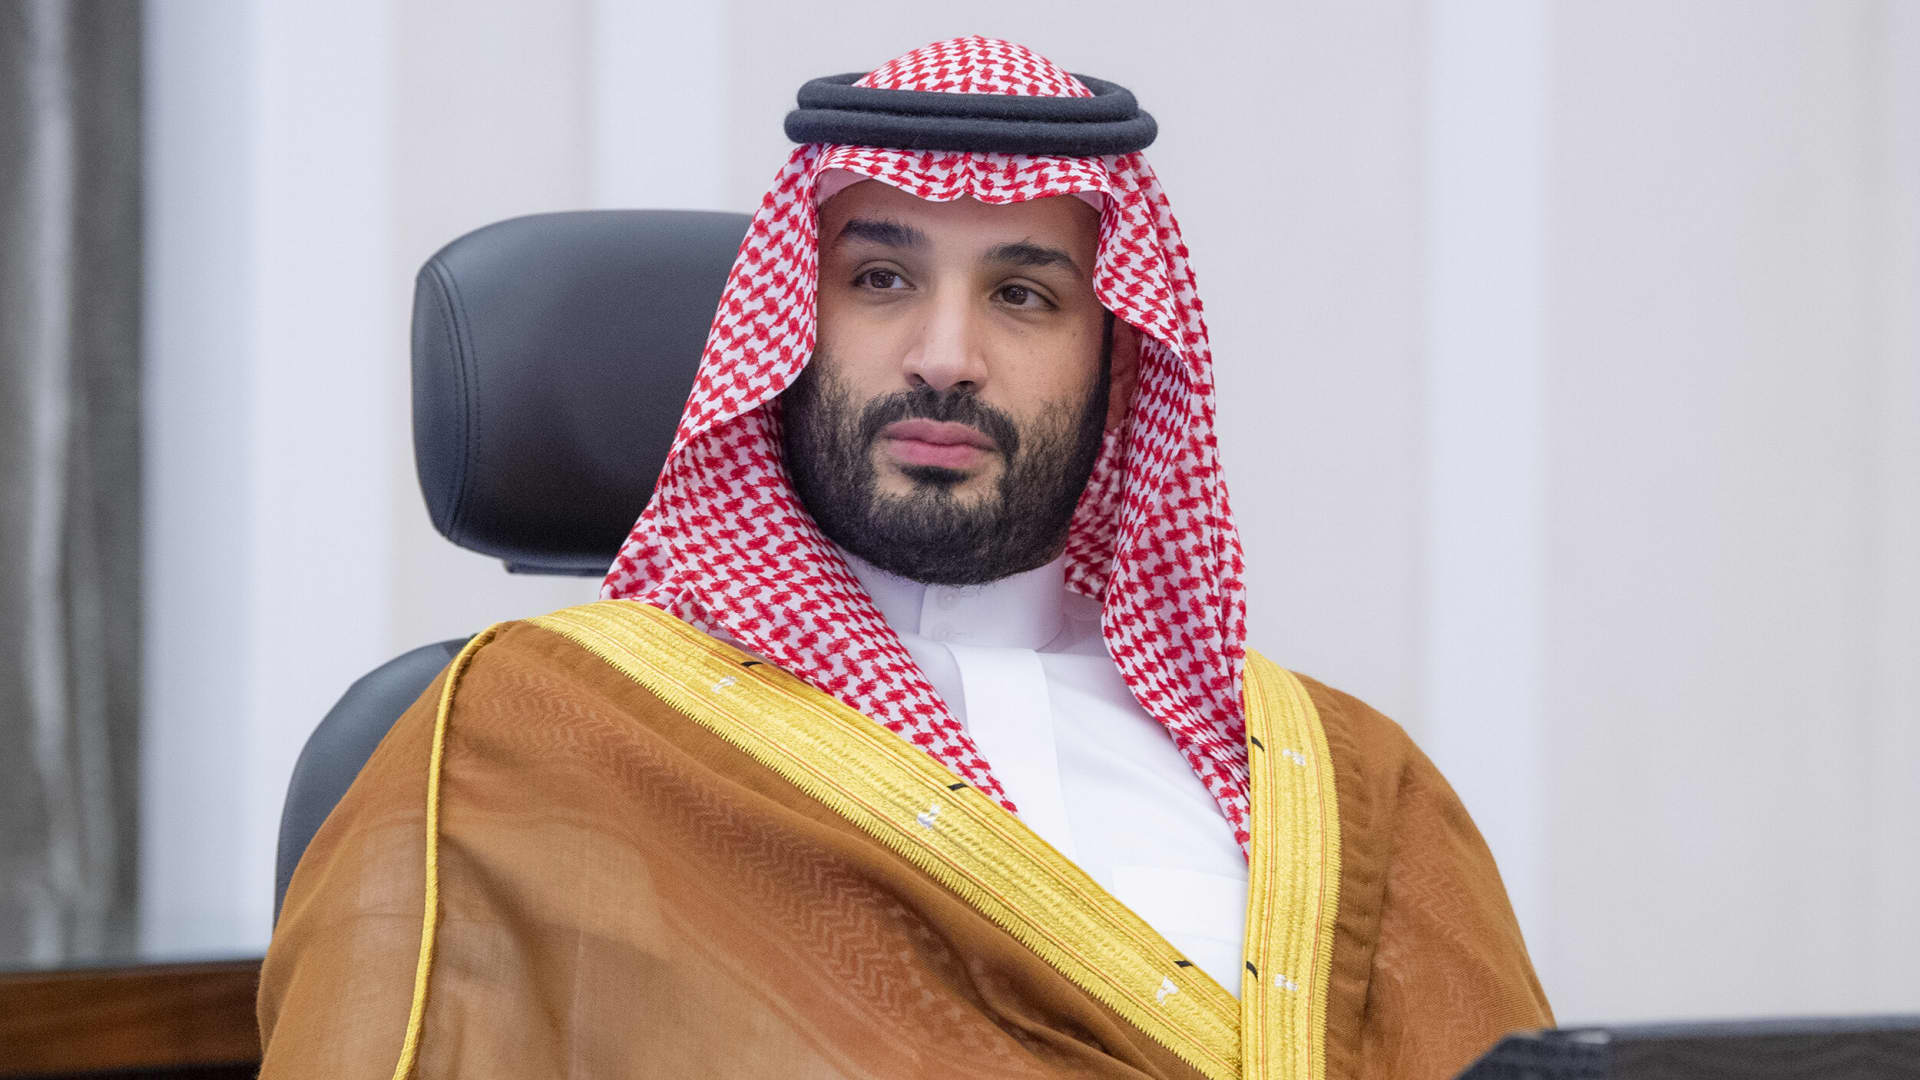 Saudi Arabian Crown Prince Mohammed bin Salman attends the G20 Leaders' Summit via videoconference in Riyadh, Saudi Arabia on October 30, 2021.